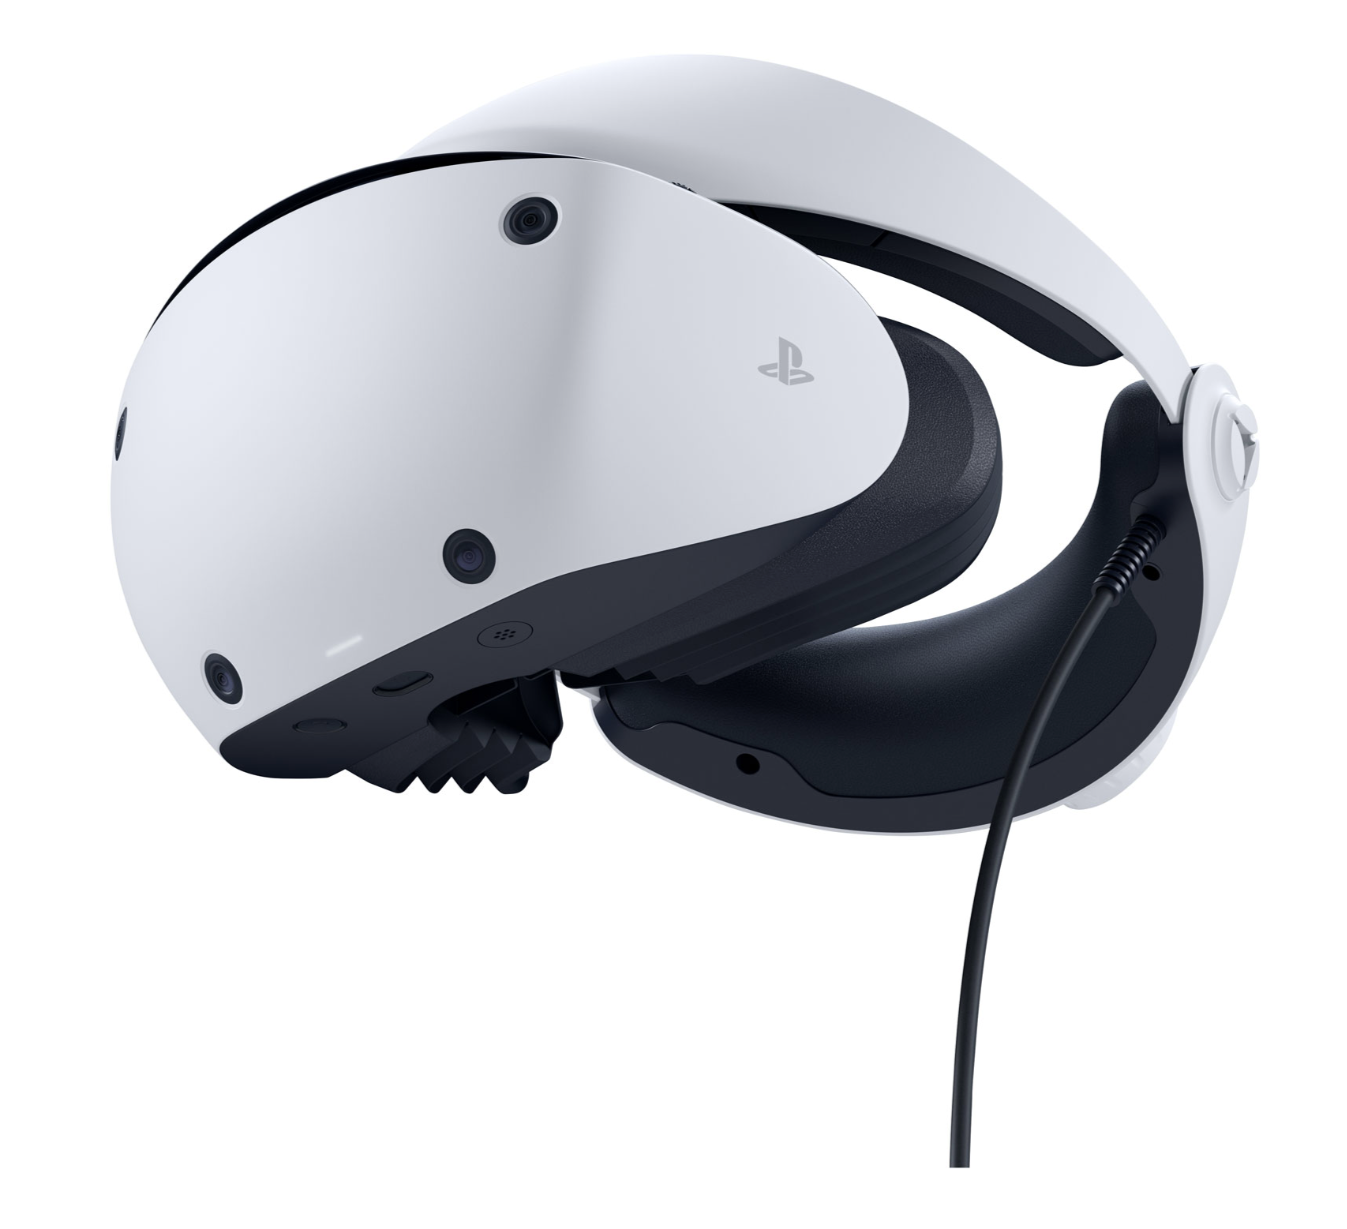 Sony VR2 headset